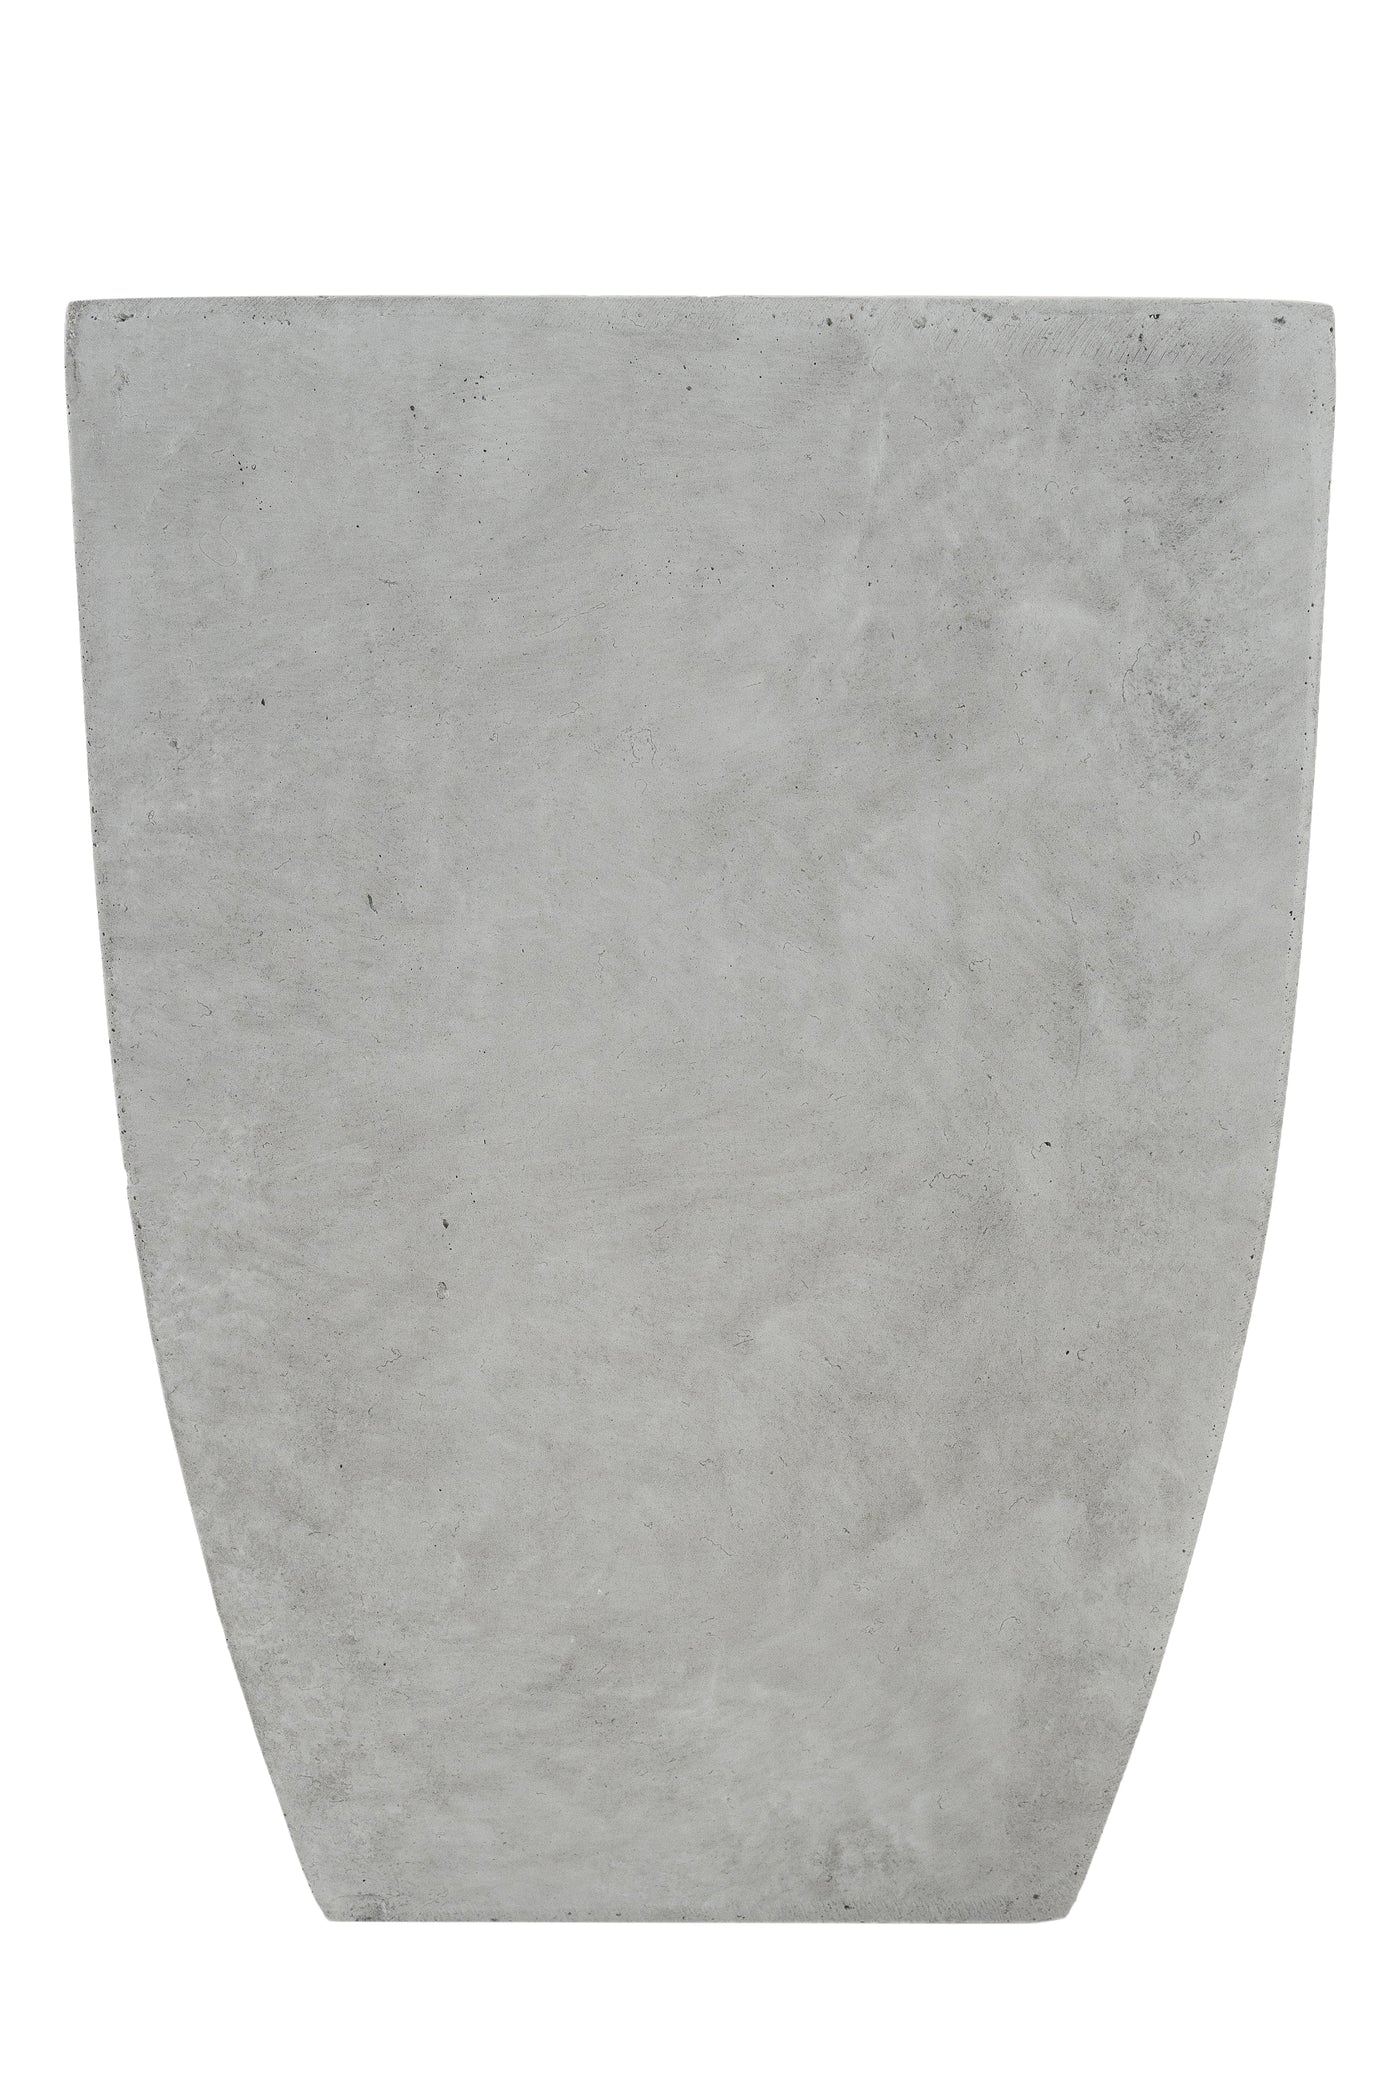 Ghiveci pt flori 28x28x40 cm. ciment alb